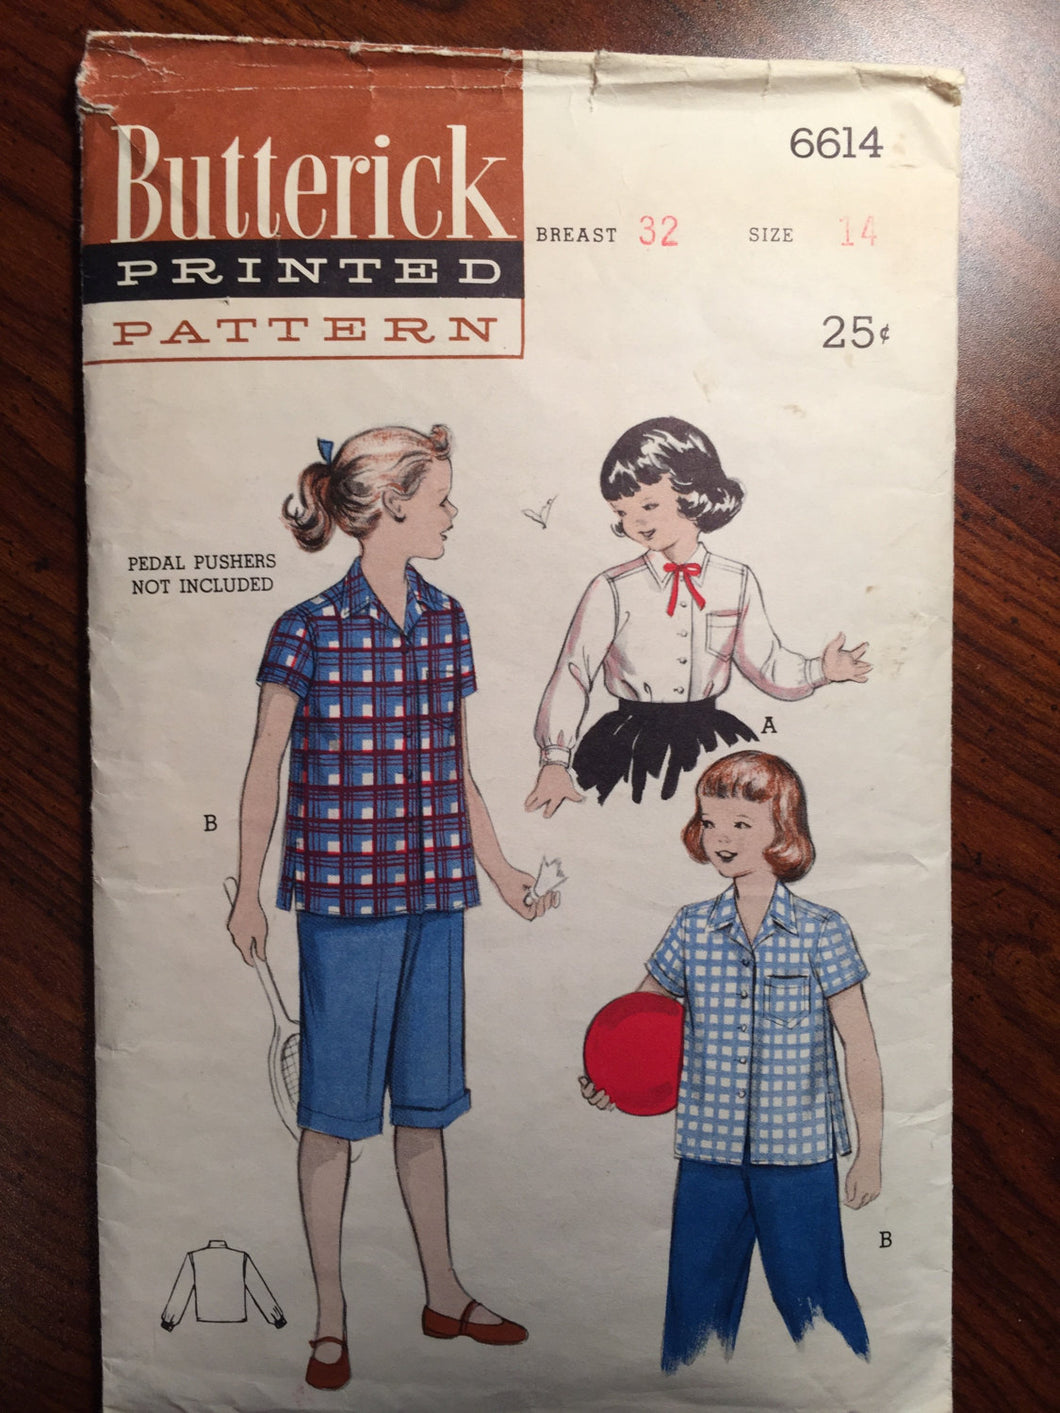 Vintage 1950s Butterick Girl's Blouse Pattern #6614 Size 14, Breast 32